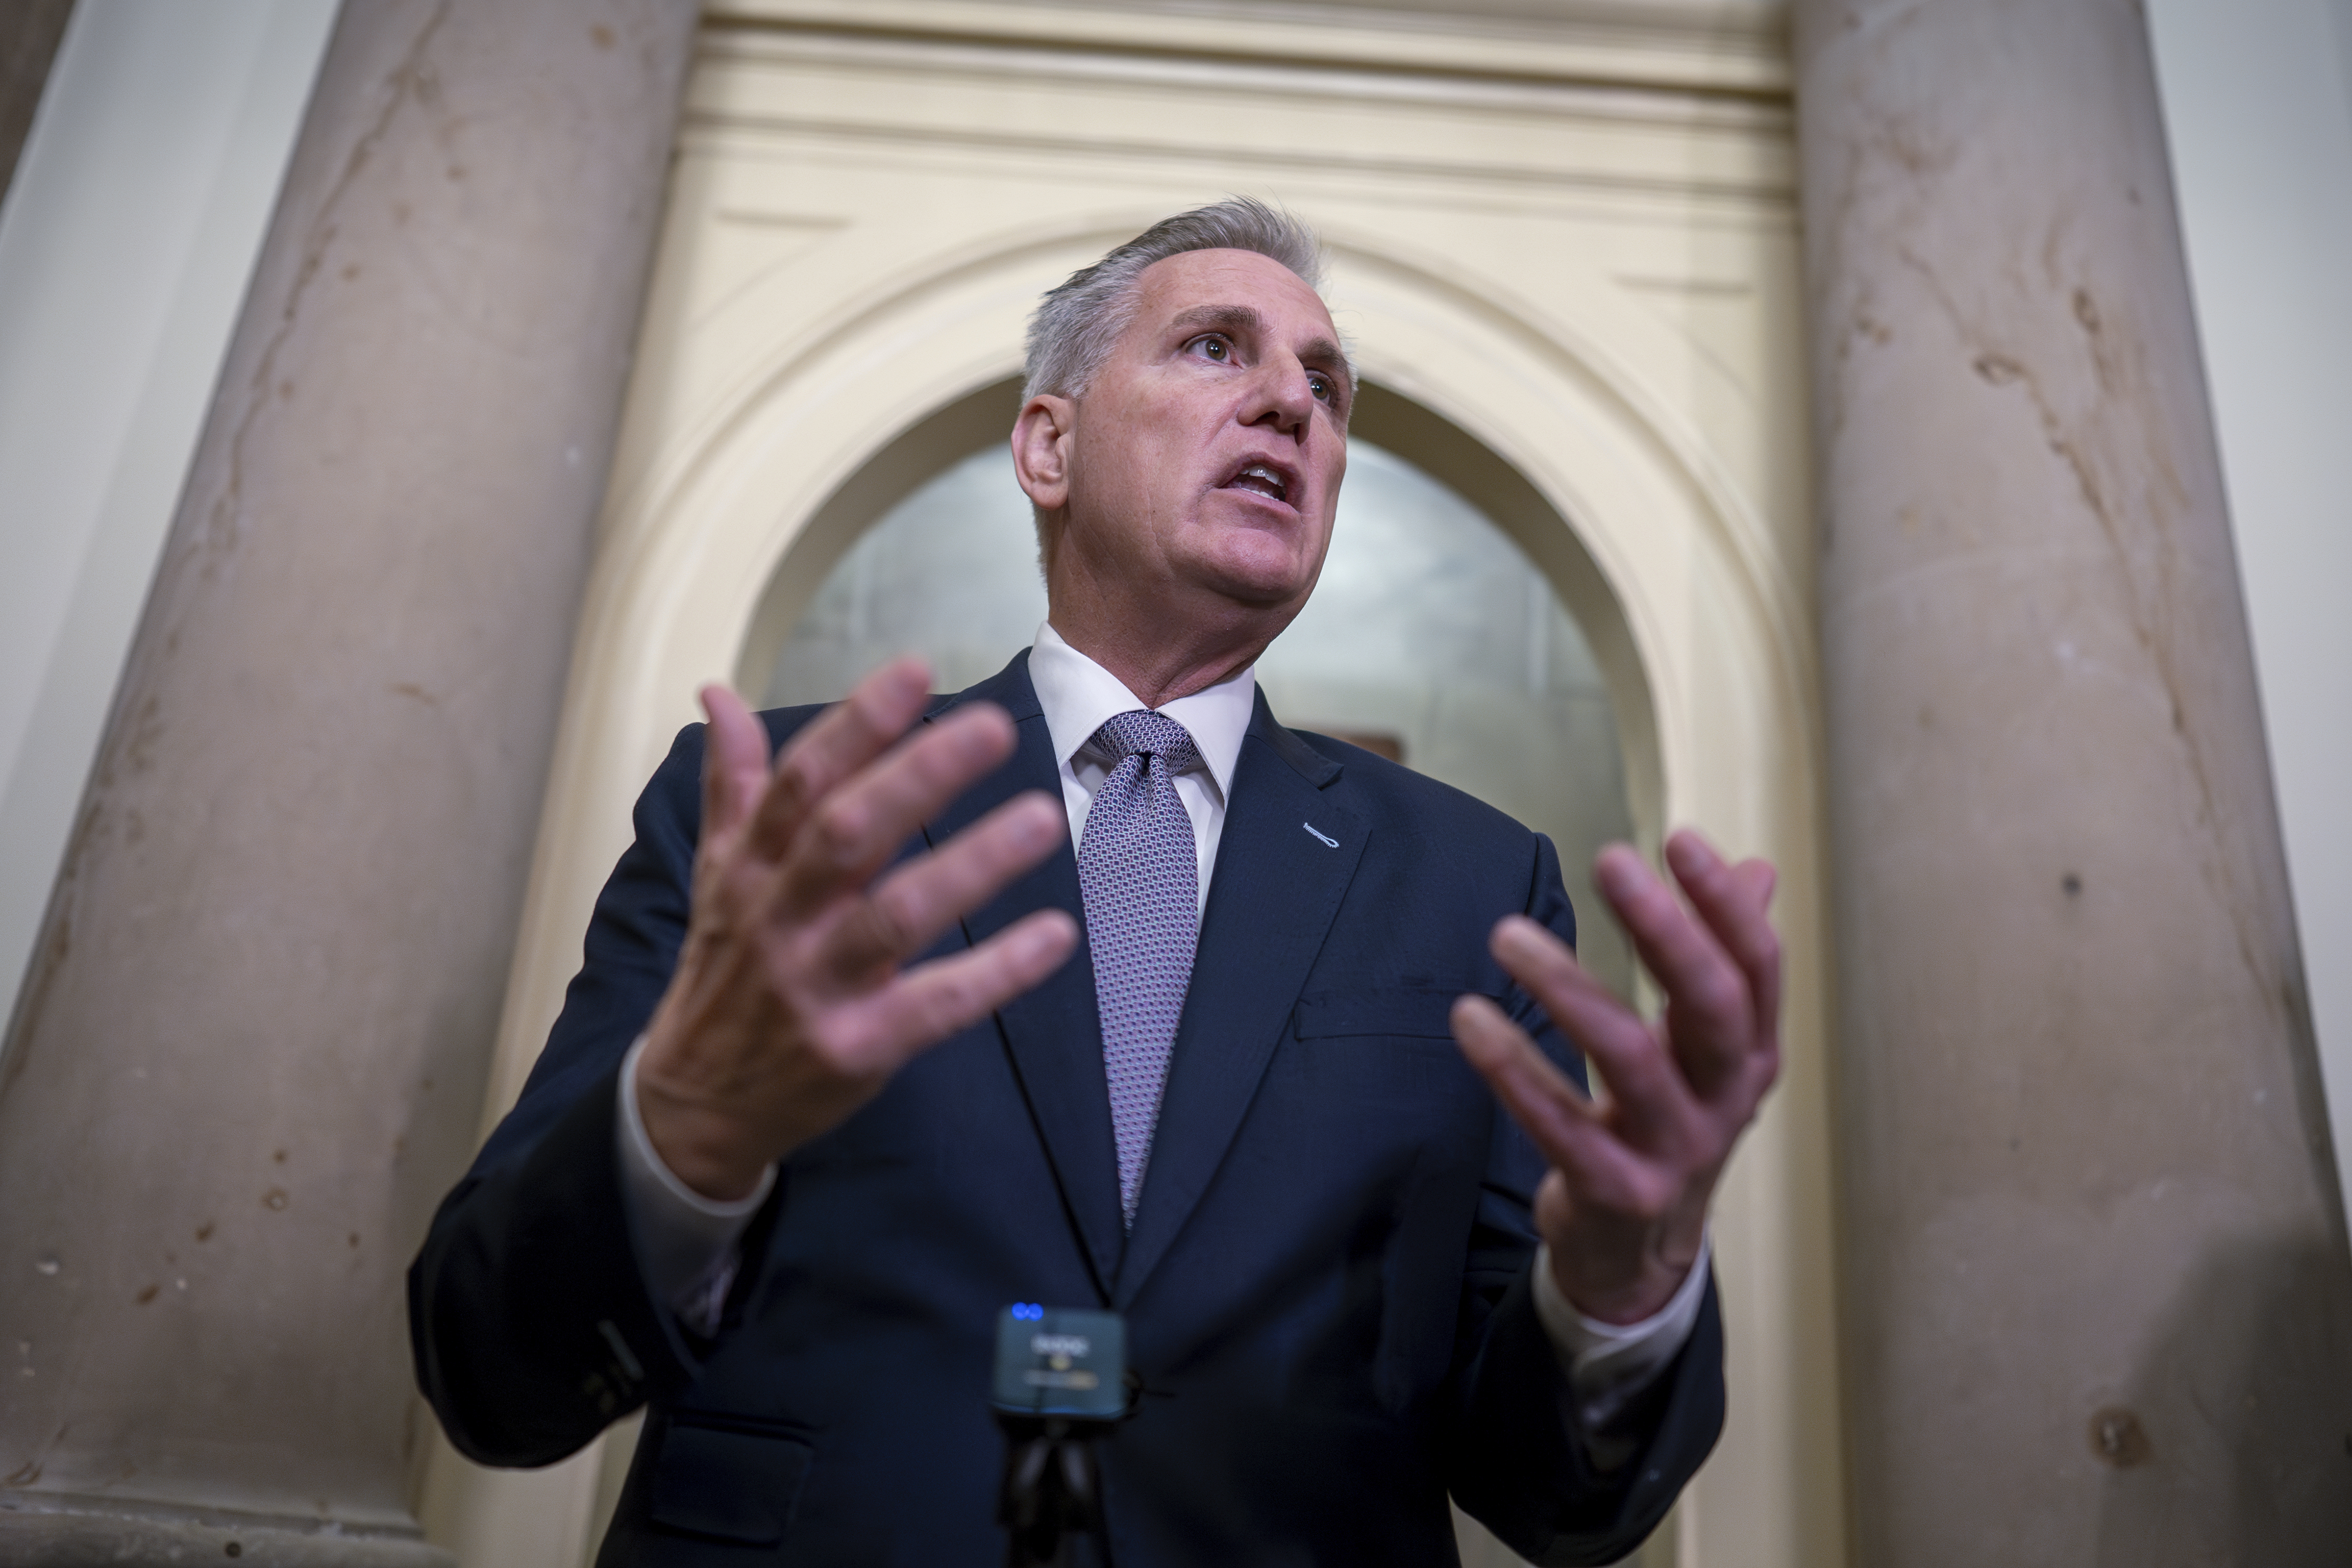 Senators used a 'talking stick' during shutdown negotiations